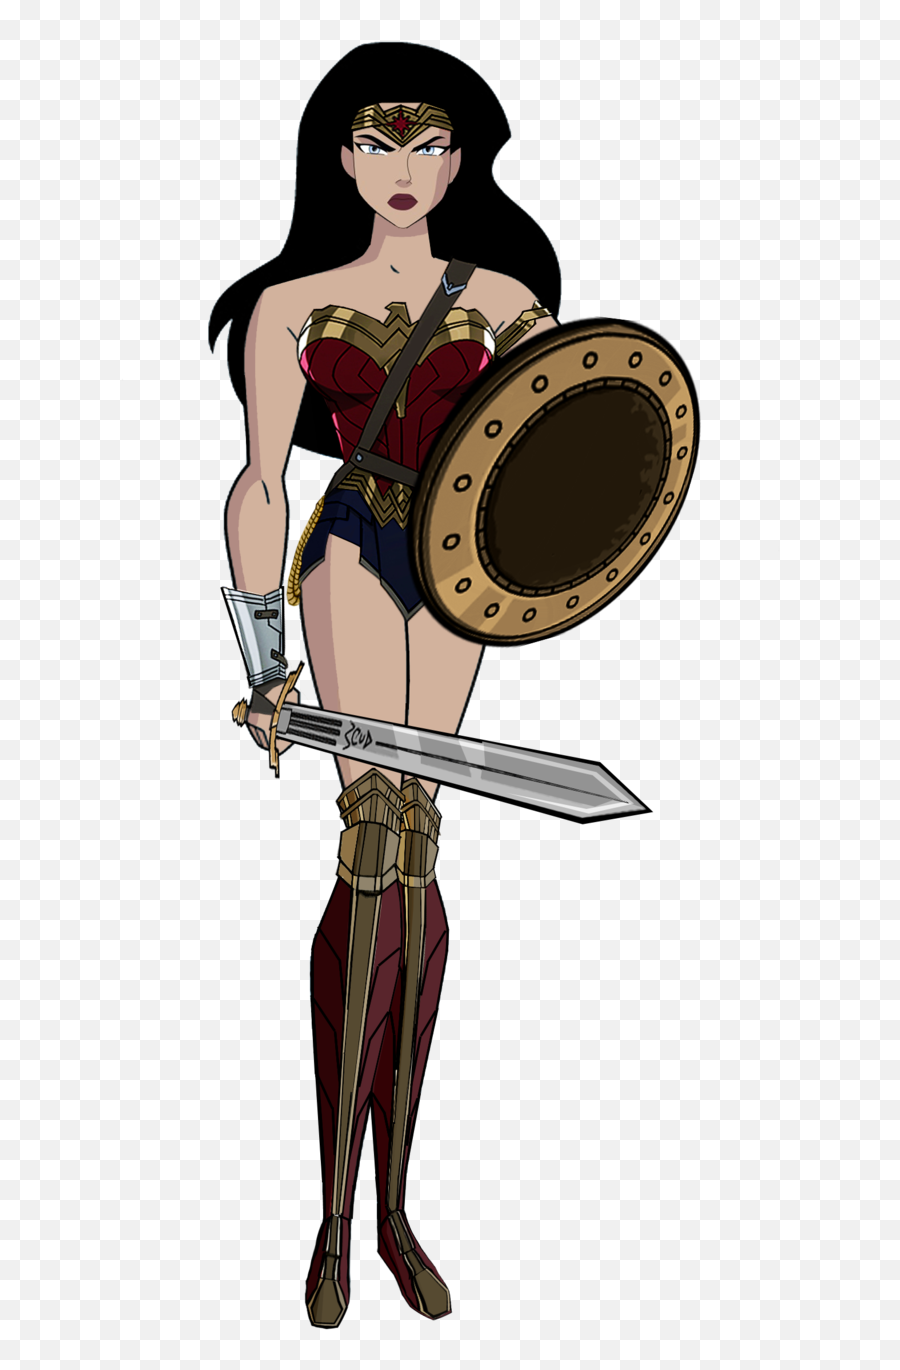 Jl Wonder Woman Dawn Of Justice By Alexbadass - Wonder Woman Wonder Woman Sword And Shield Png,Sword And Shield Png